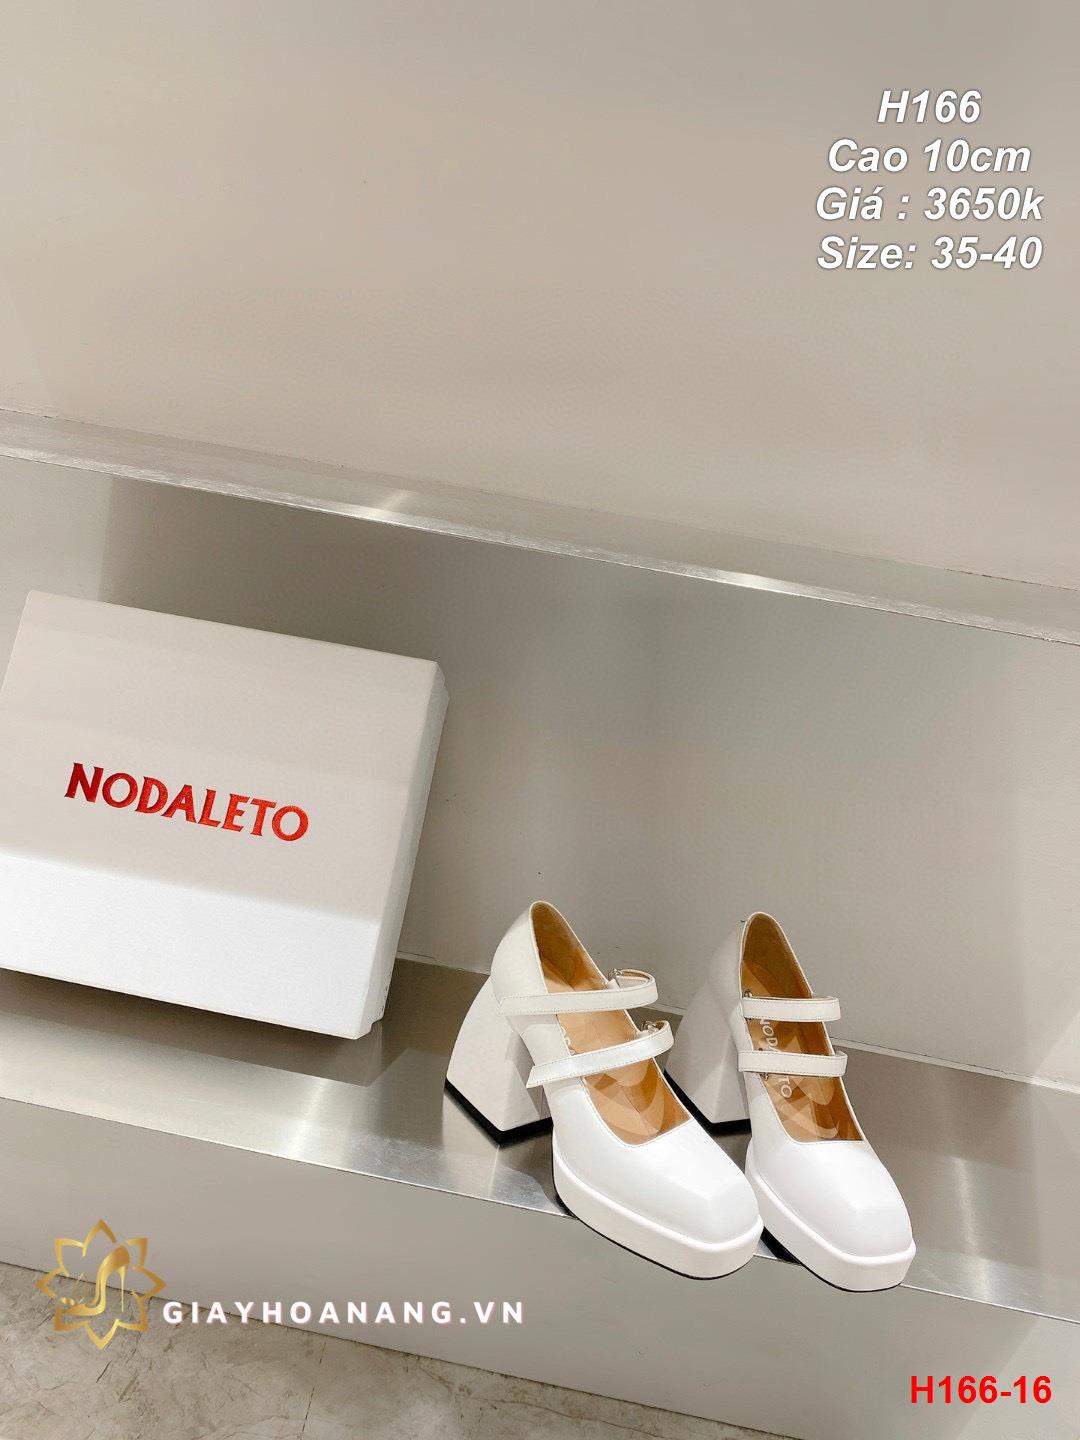 H166-16 Nodaleto sandal cao 10cm siêu cấp